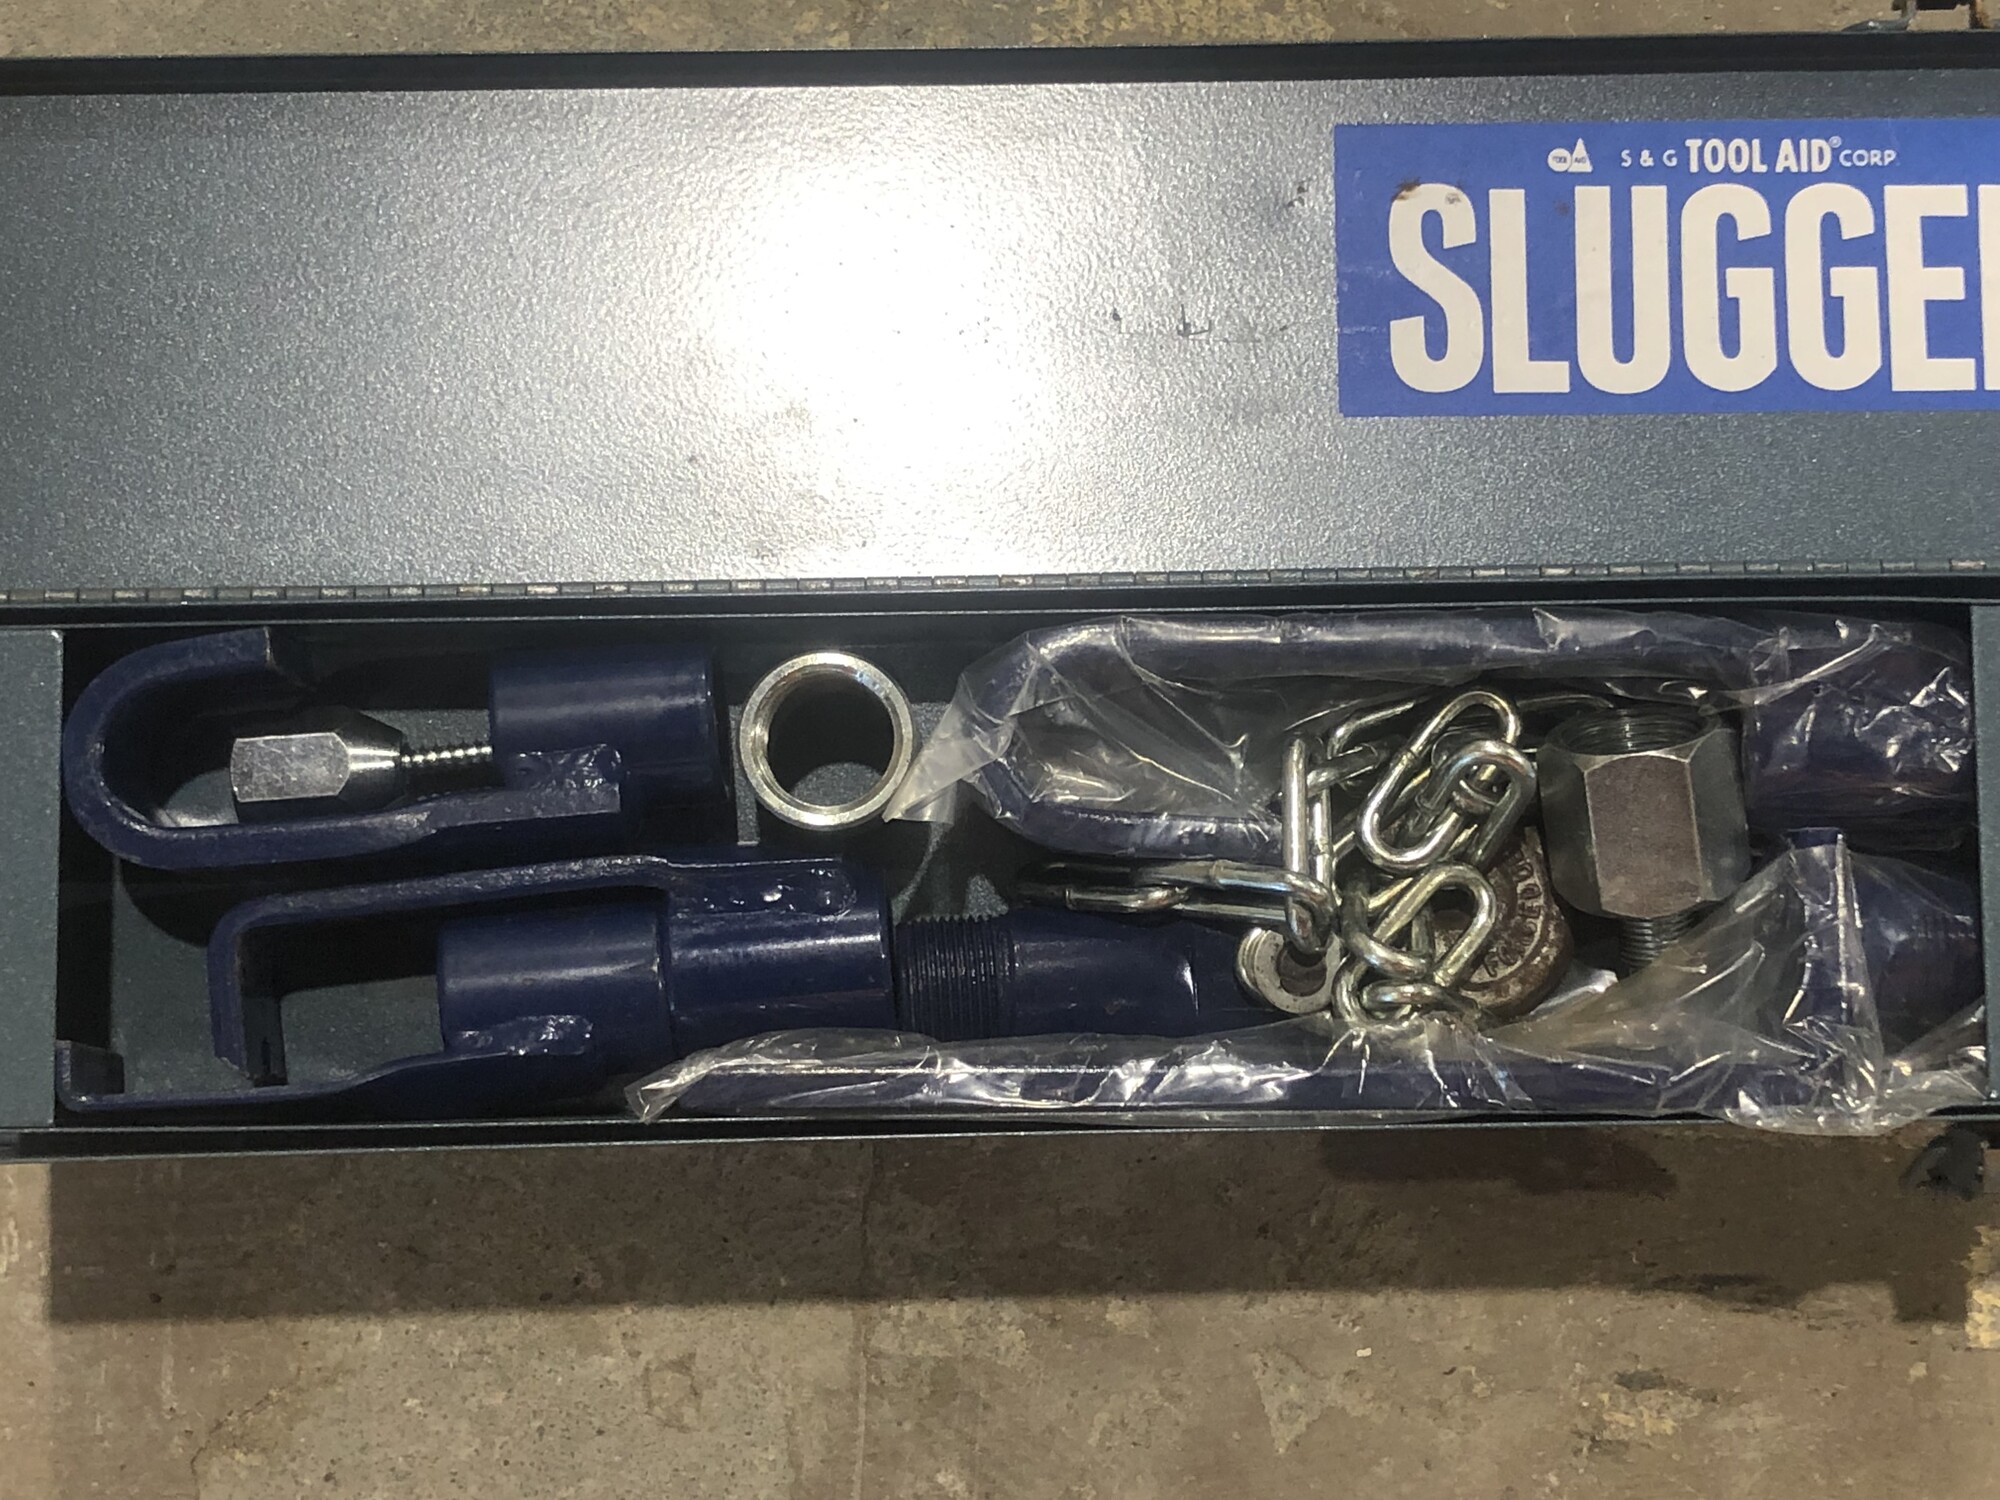 S & G Tool Aid 81100 Slugger 10 Lbs Slide Hammer Kit In Box 